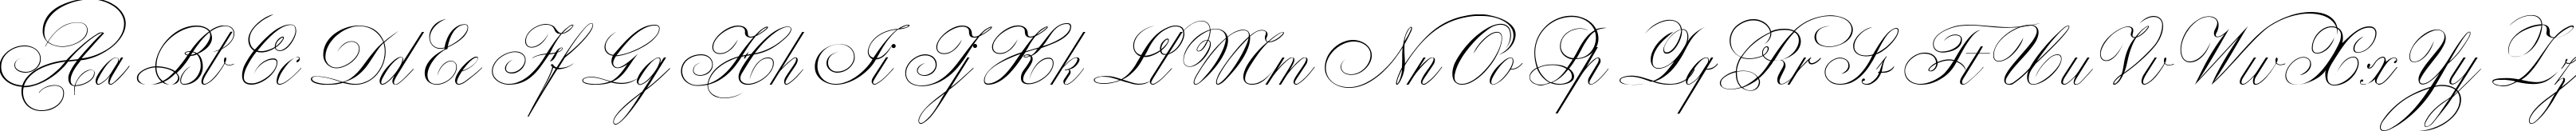 Пример написания английского алфавита шрифтом Classica Two